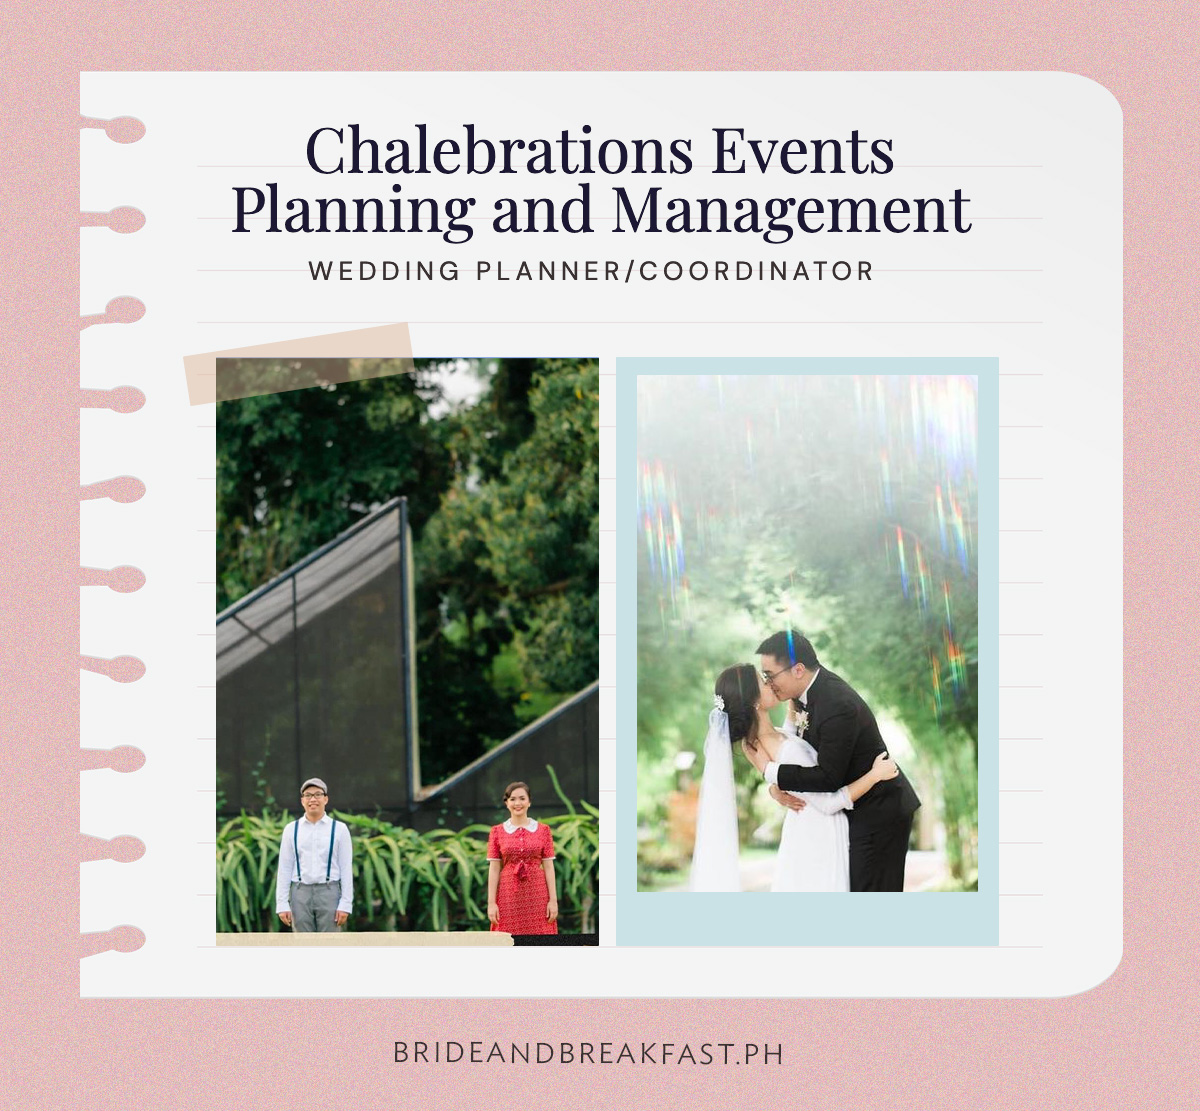 Chalebrations Events Planning and Management Wedding Planner/Coordinator